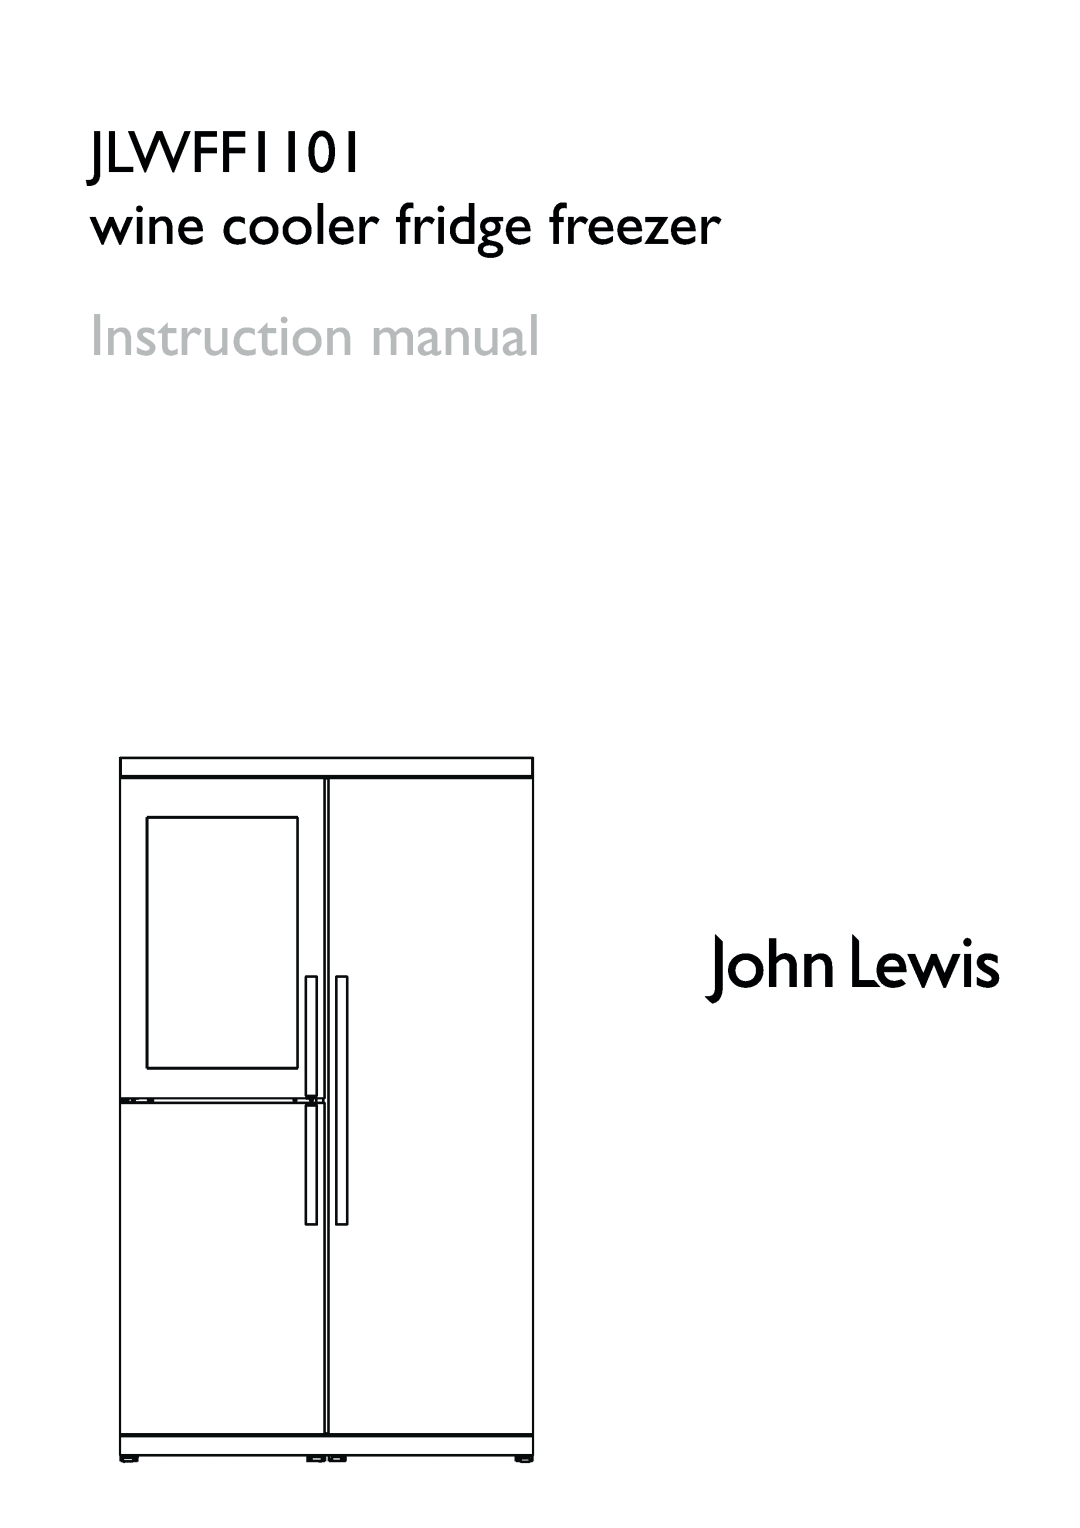 John Lewis instruction manual JLWFF1101 wine cooler fridge freezer, Instruction manual 